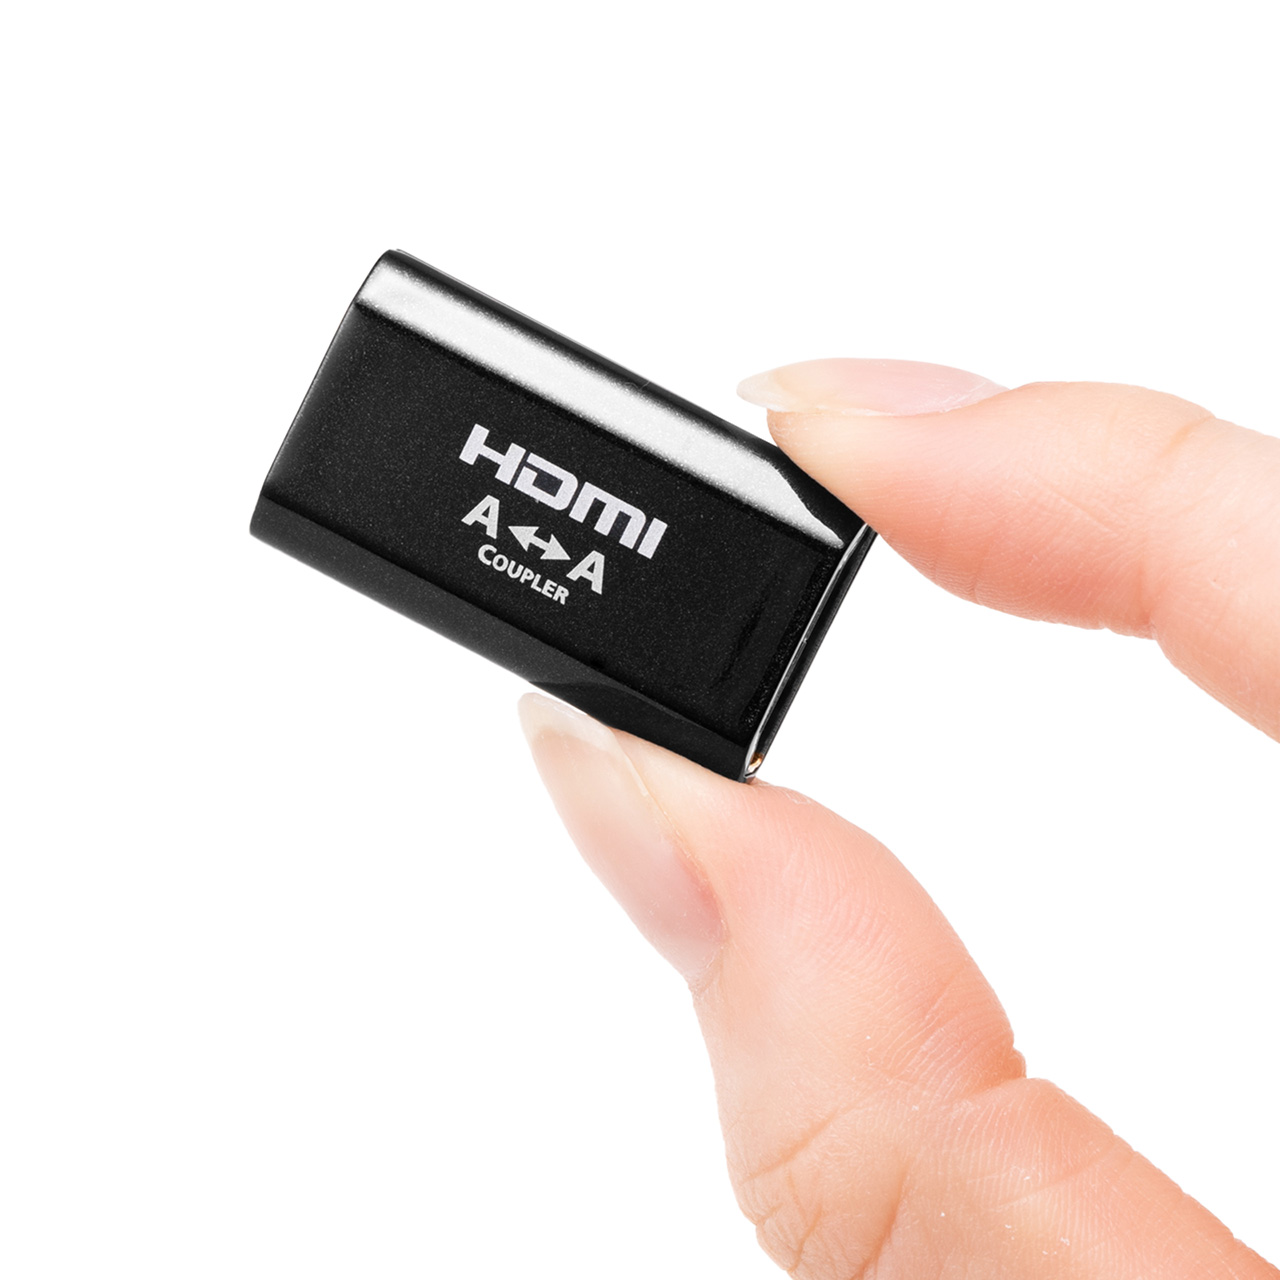 HDMI延長アダプタ HDMI中継アダプタ メス‐メス 延長コネクター 4K/60Hz対応 18Gbps 3D HDR ARC対応 最長5m延長 500-HD029